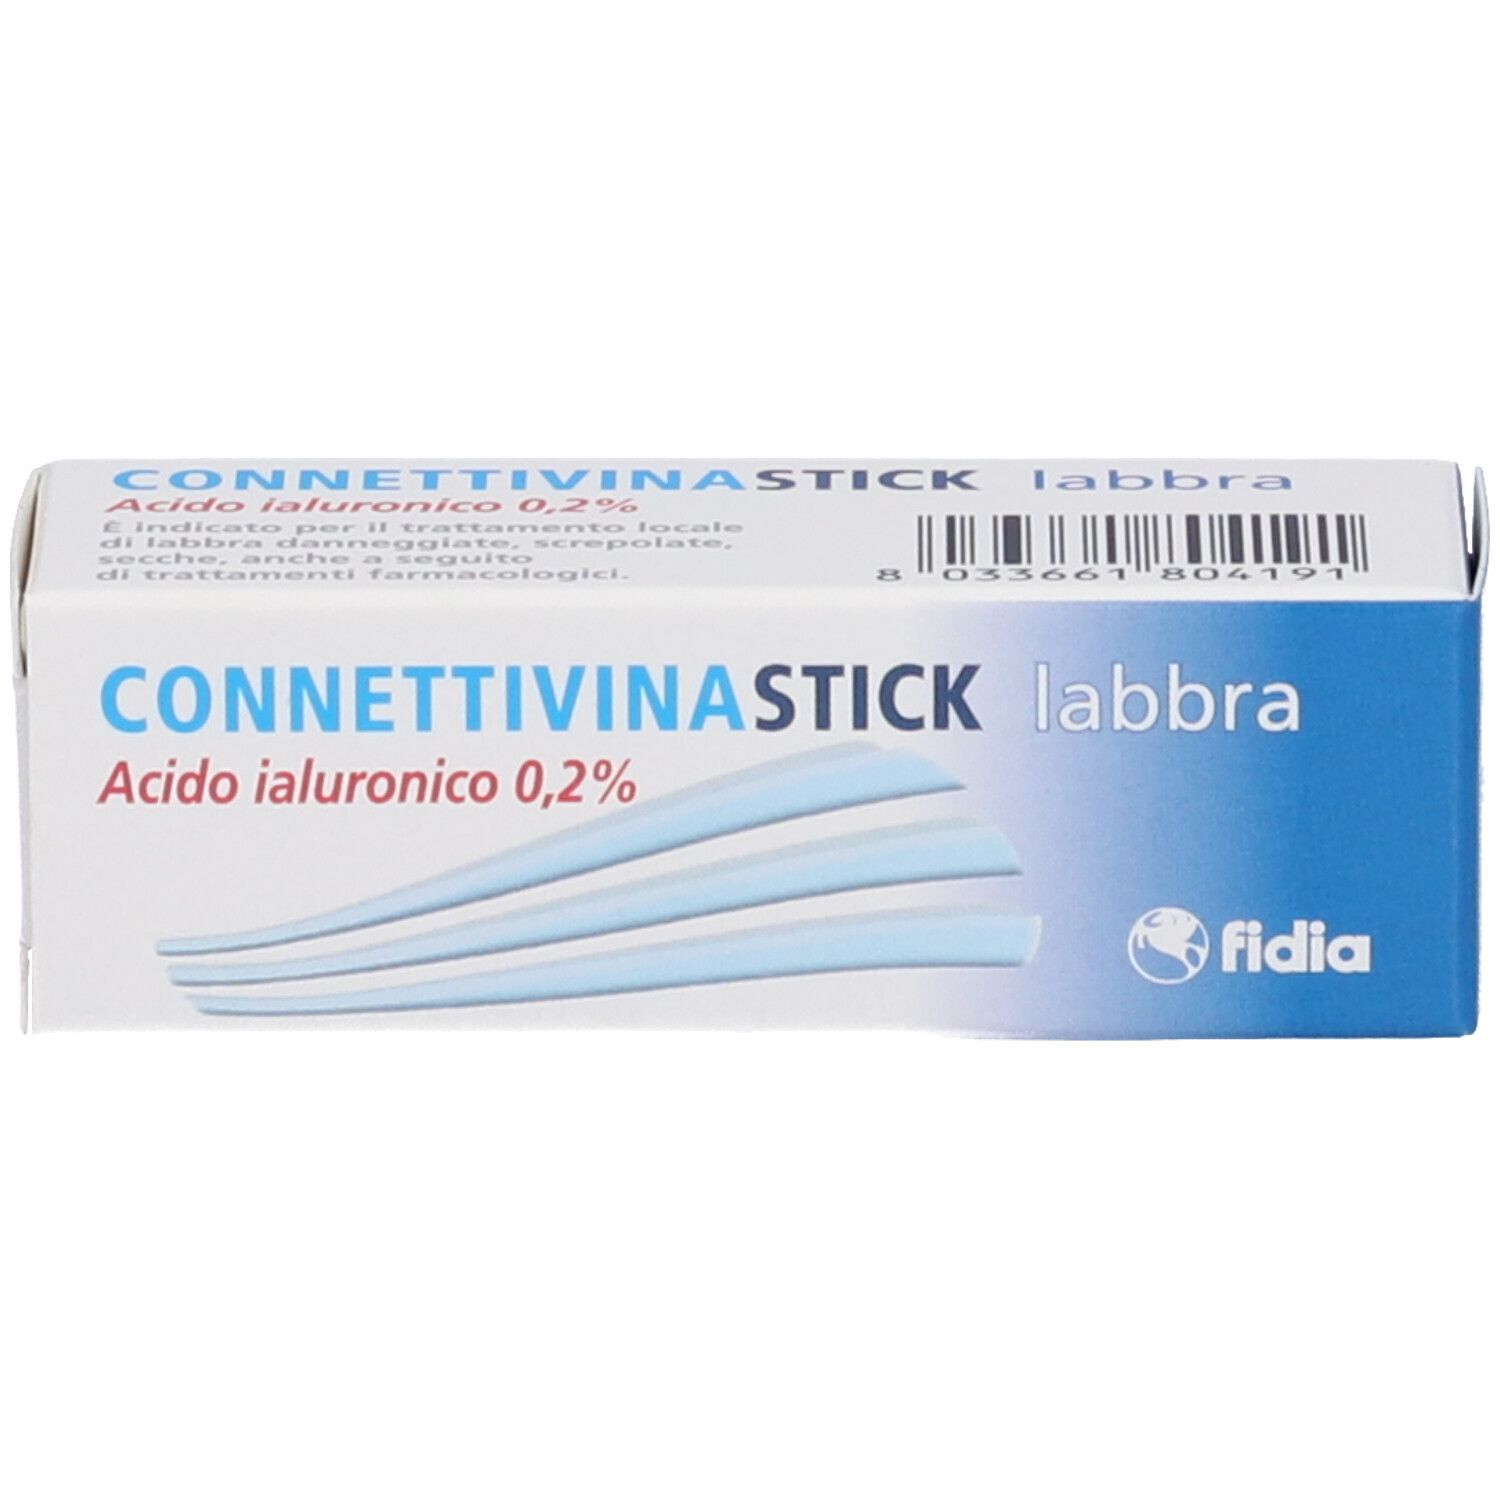 ConnettivinaStick Labbra